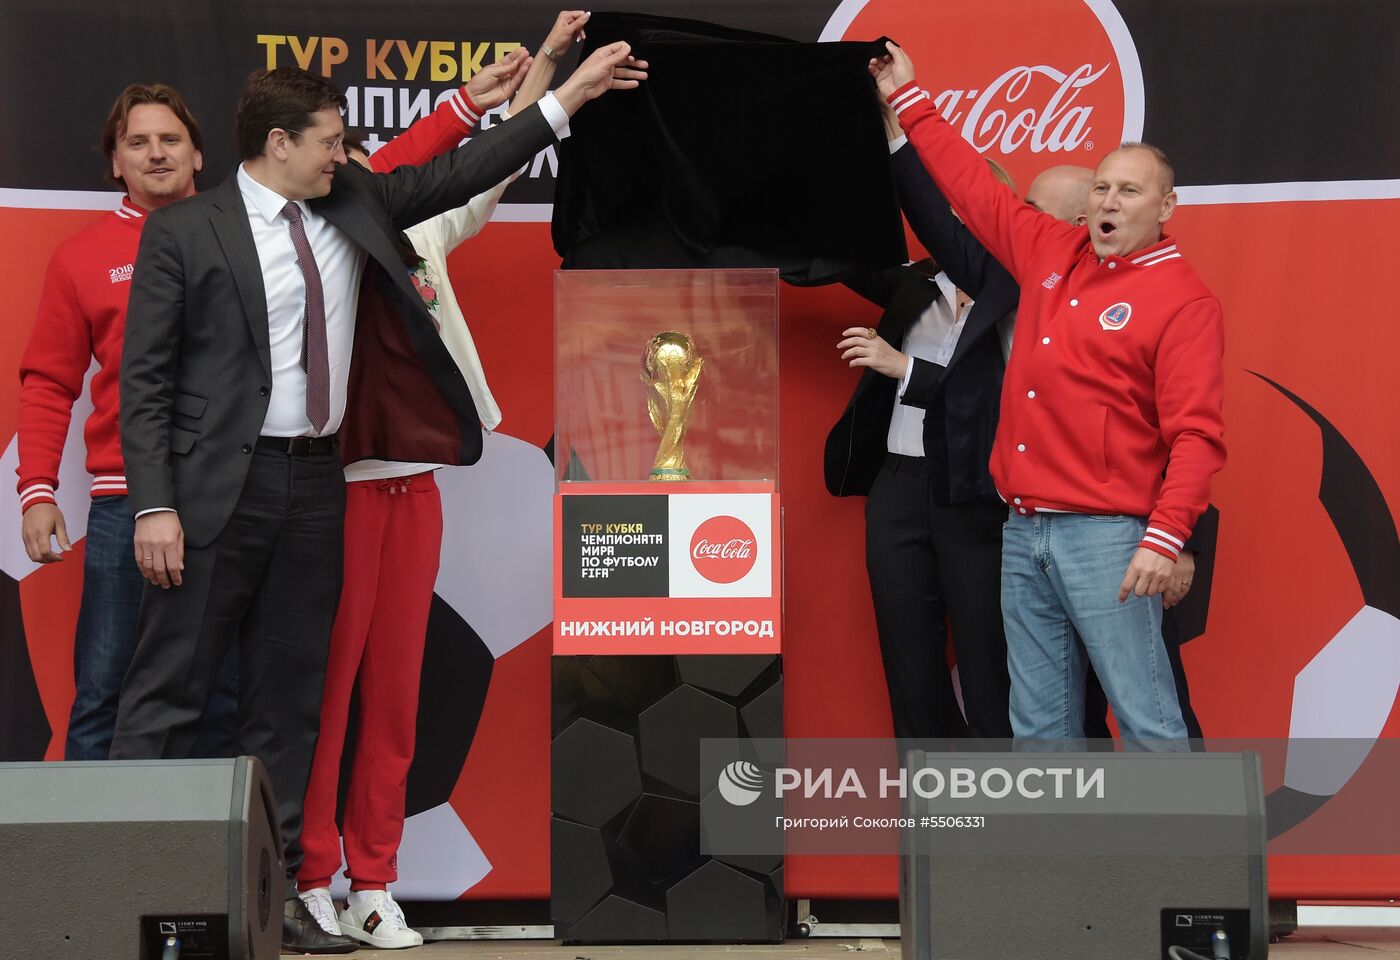 Кубок ЧМ-2018 по футболу представили в Нижнем Новгороде